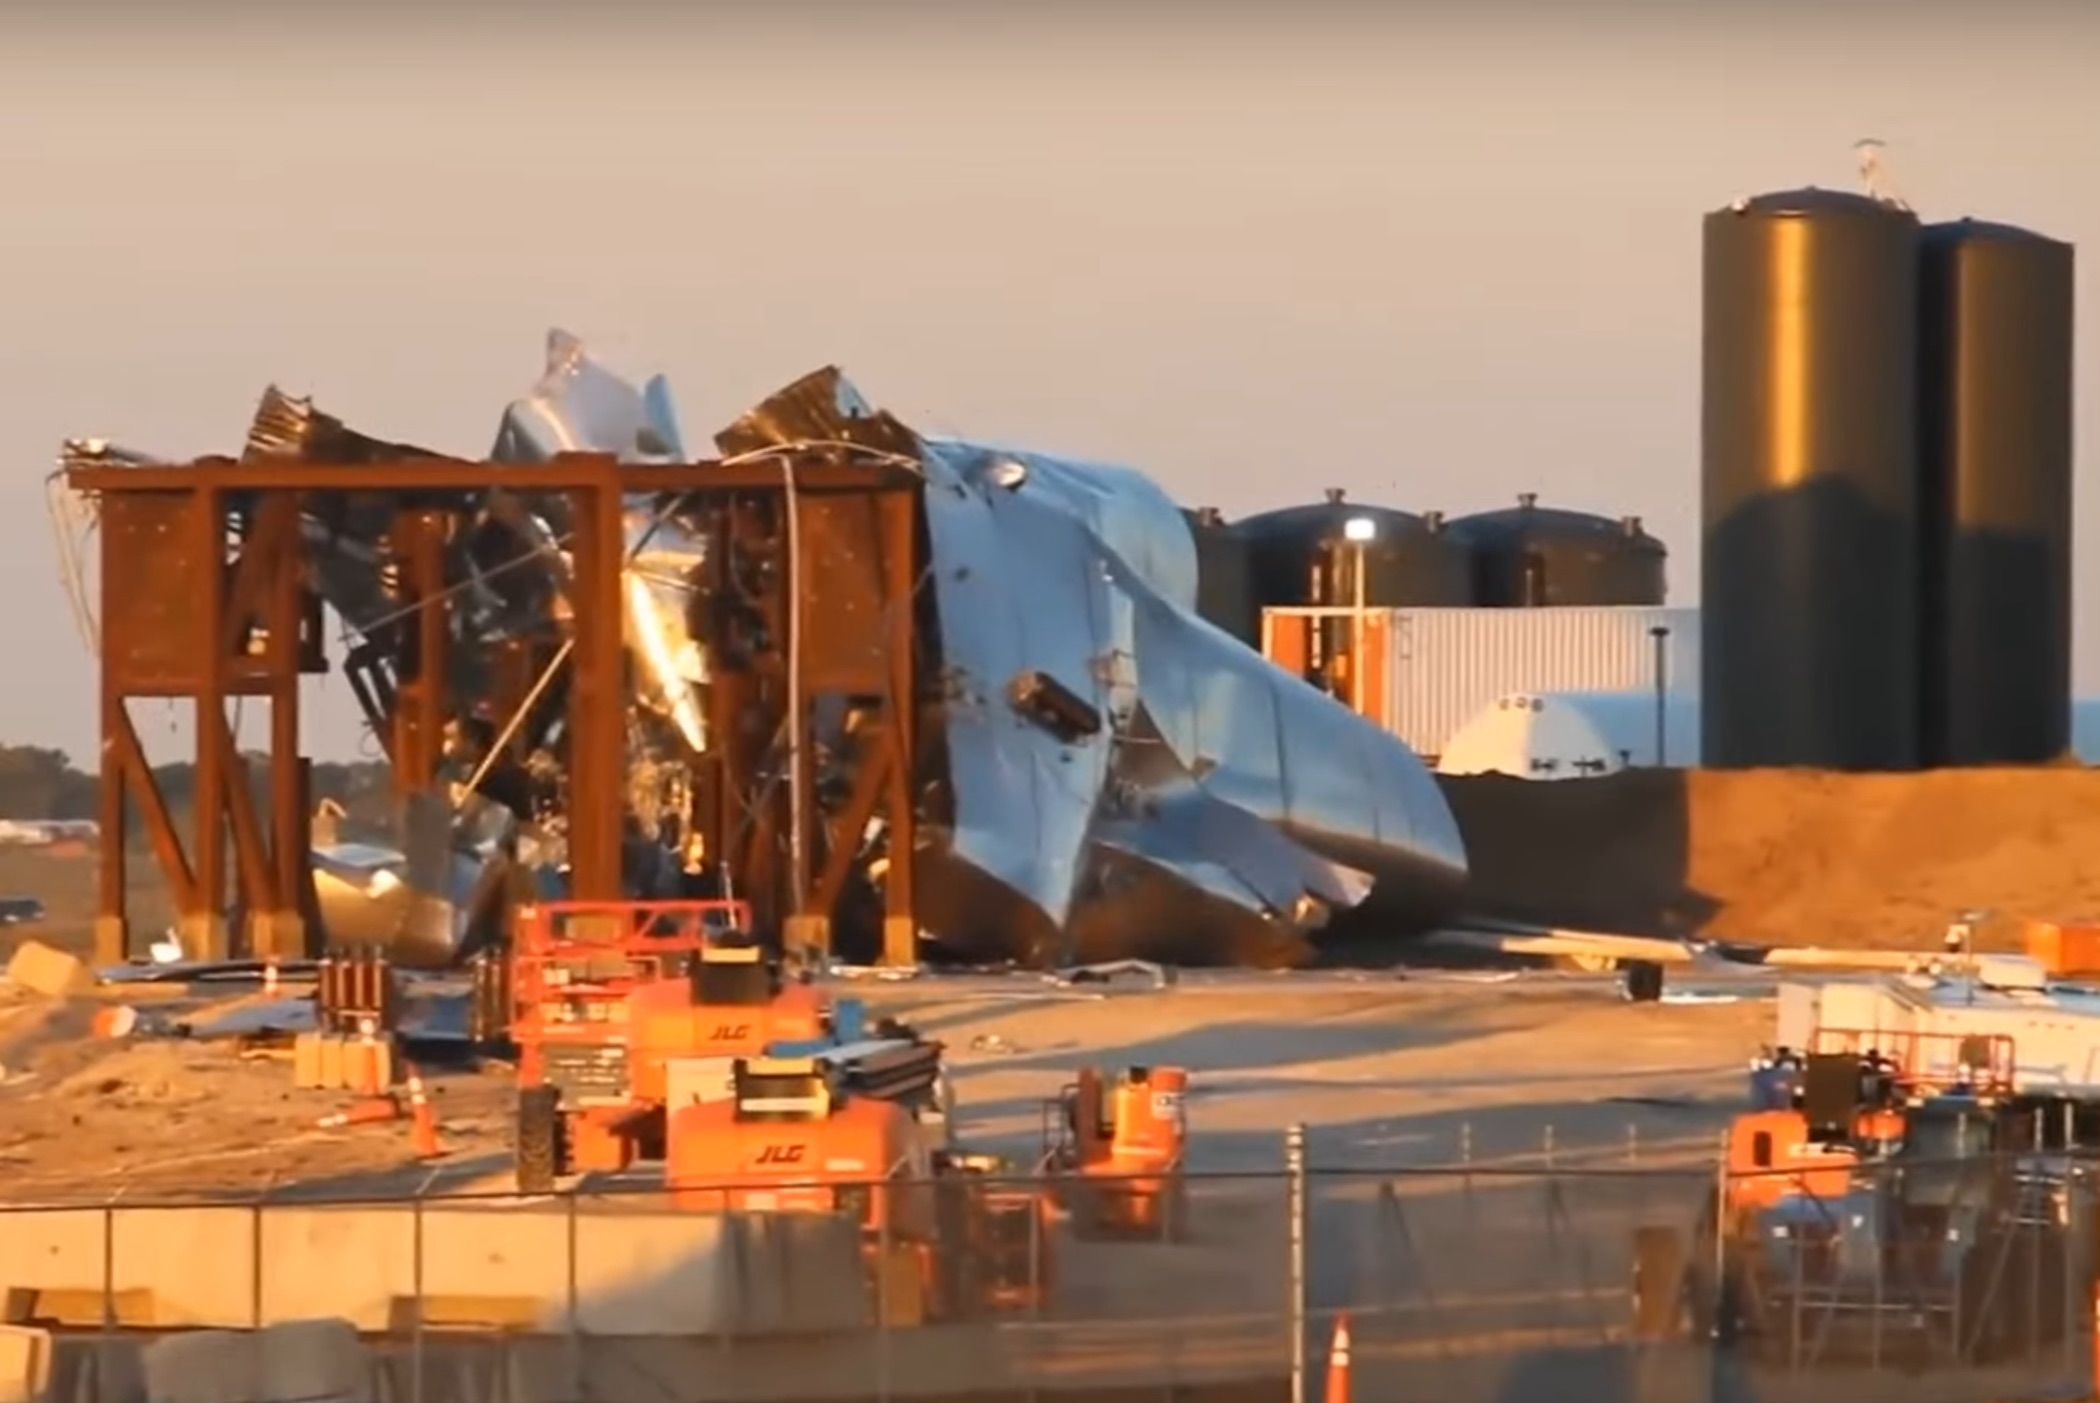 SpaceXのStarship試作機が「離陸」。圧力容器試験中に破裂の衝撃で